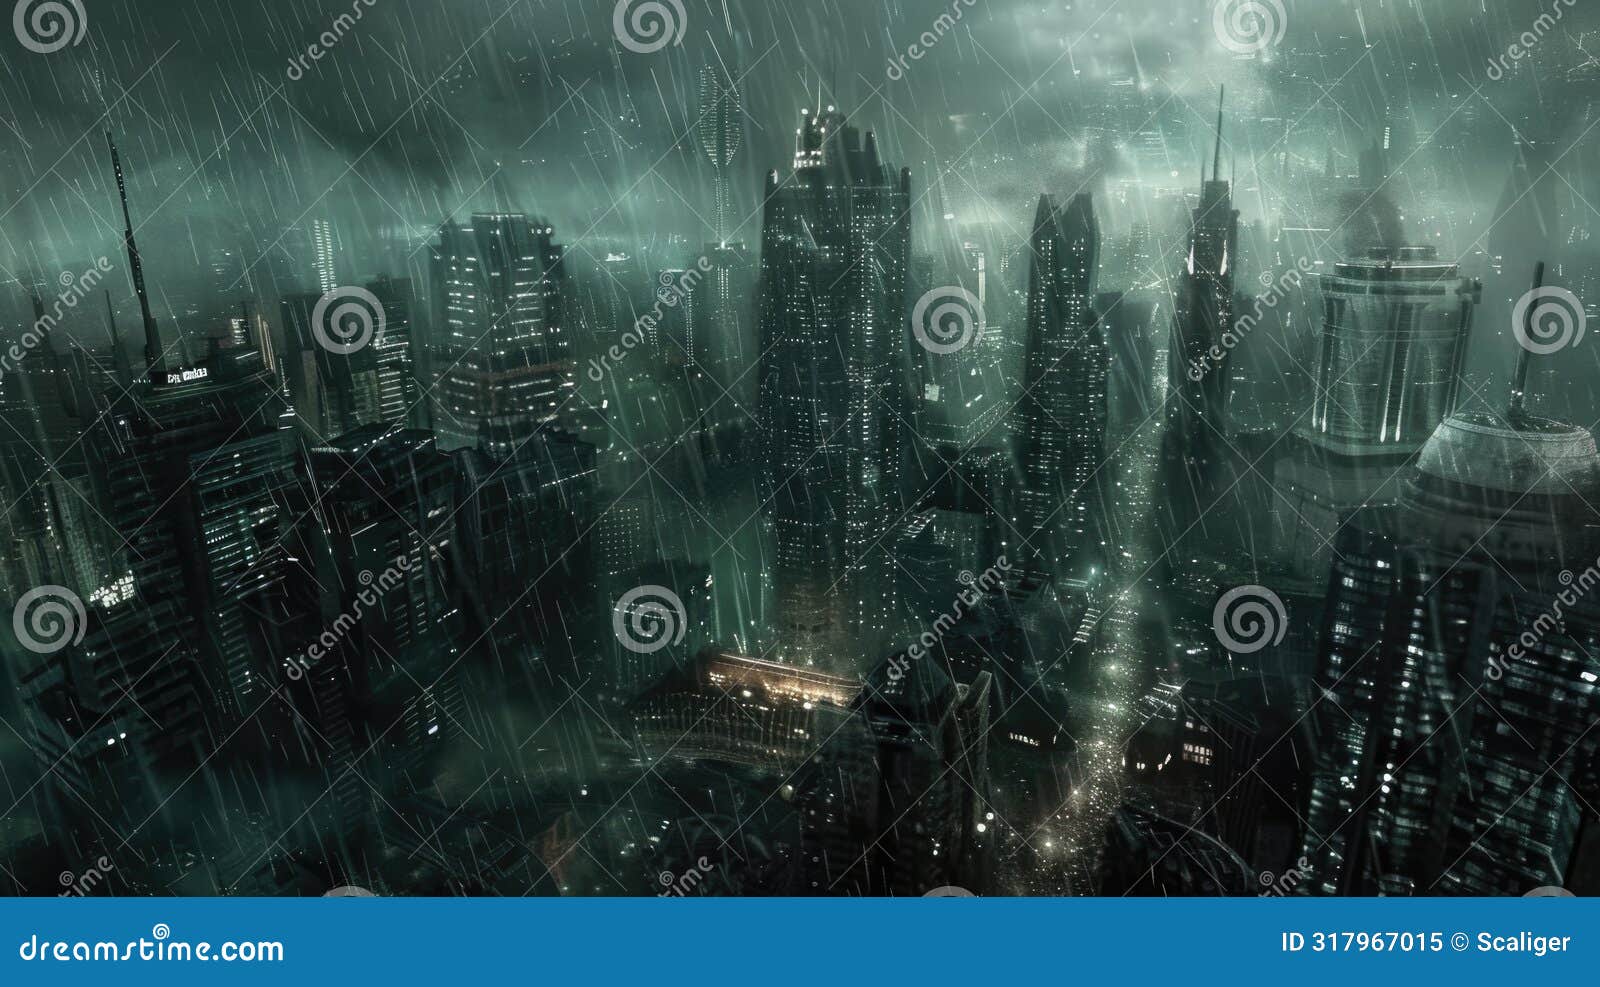 cyberpunk city in rain at night, dark futuristic urban background, modern buildings in future. theme of dystopia, storm, street,